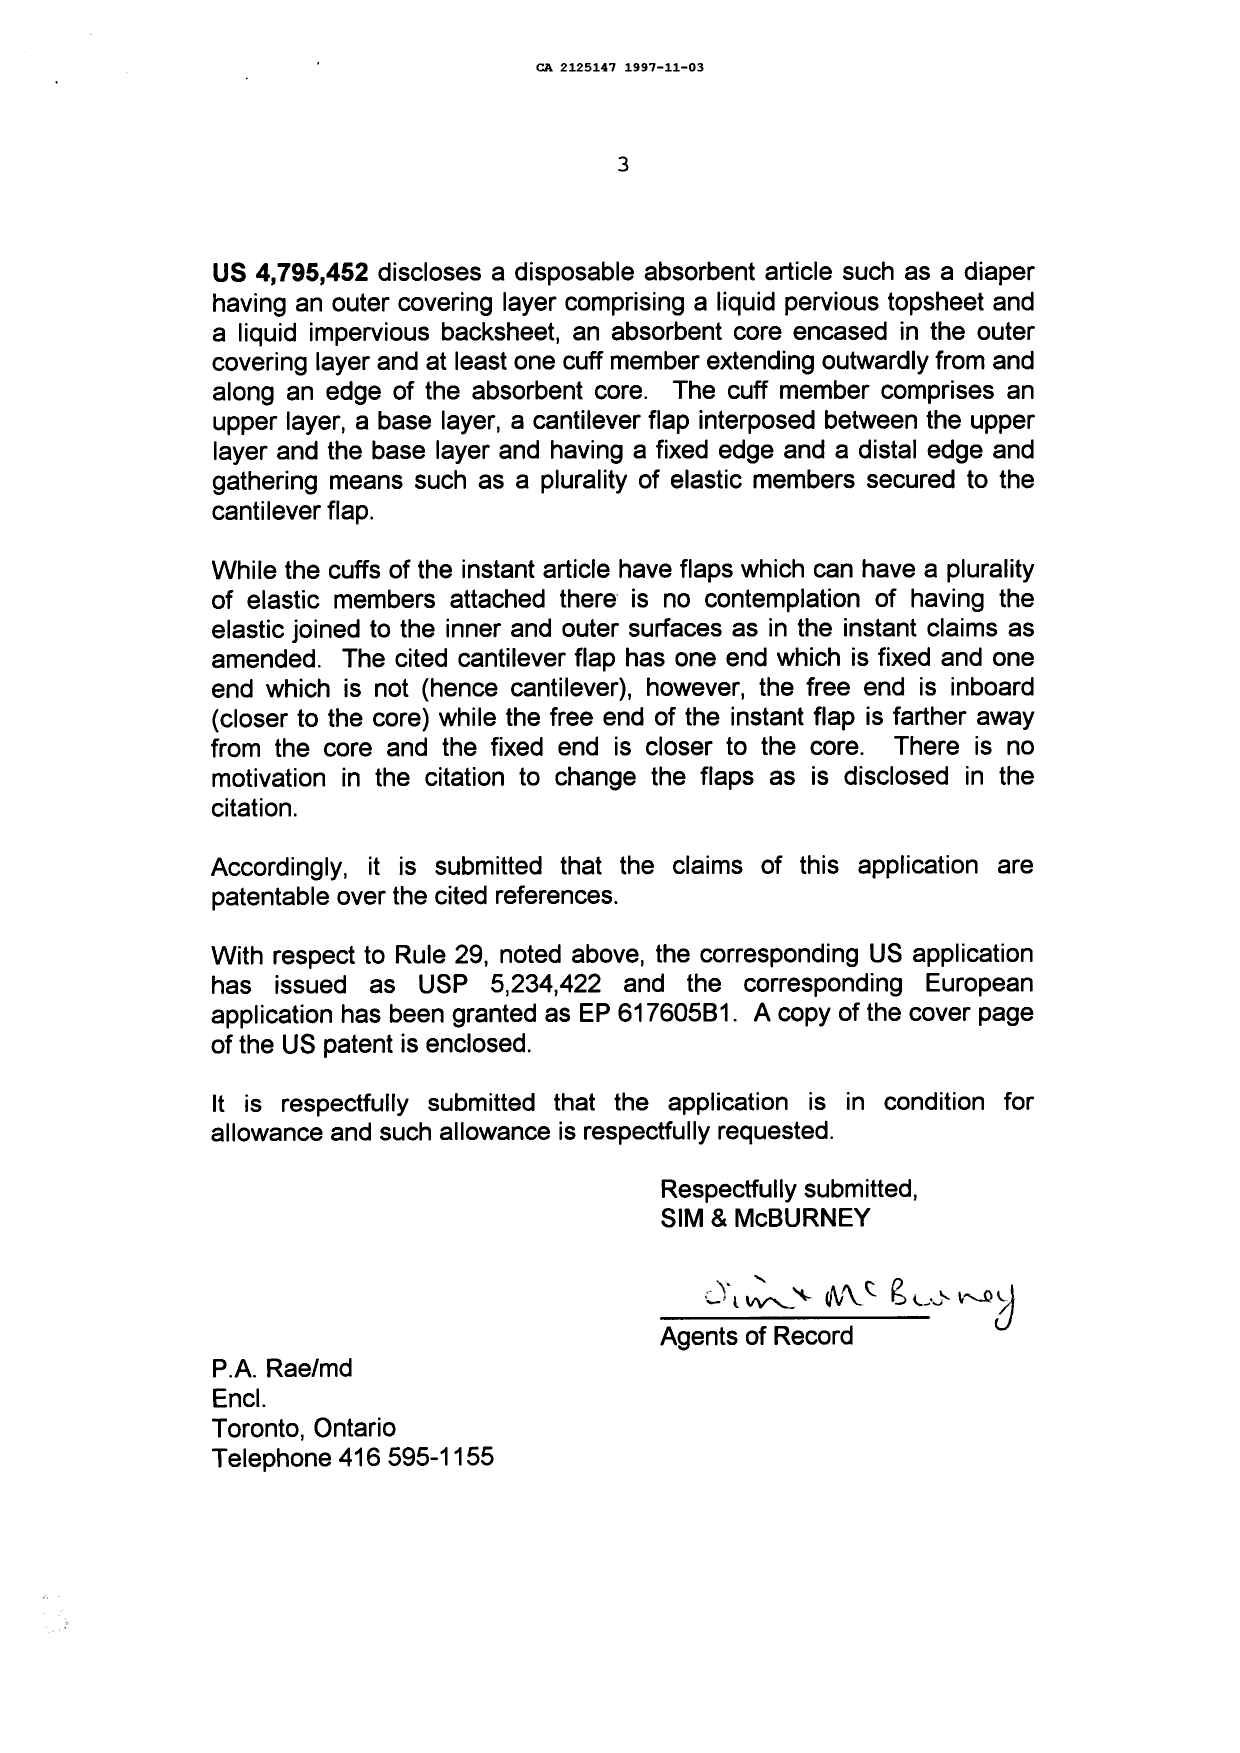 Canadian Patent Document 2125147. Prosecution Correspondence 19971103. Image 3 of 3